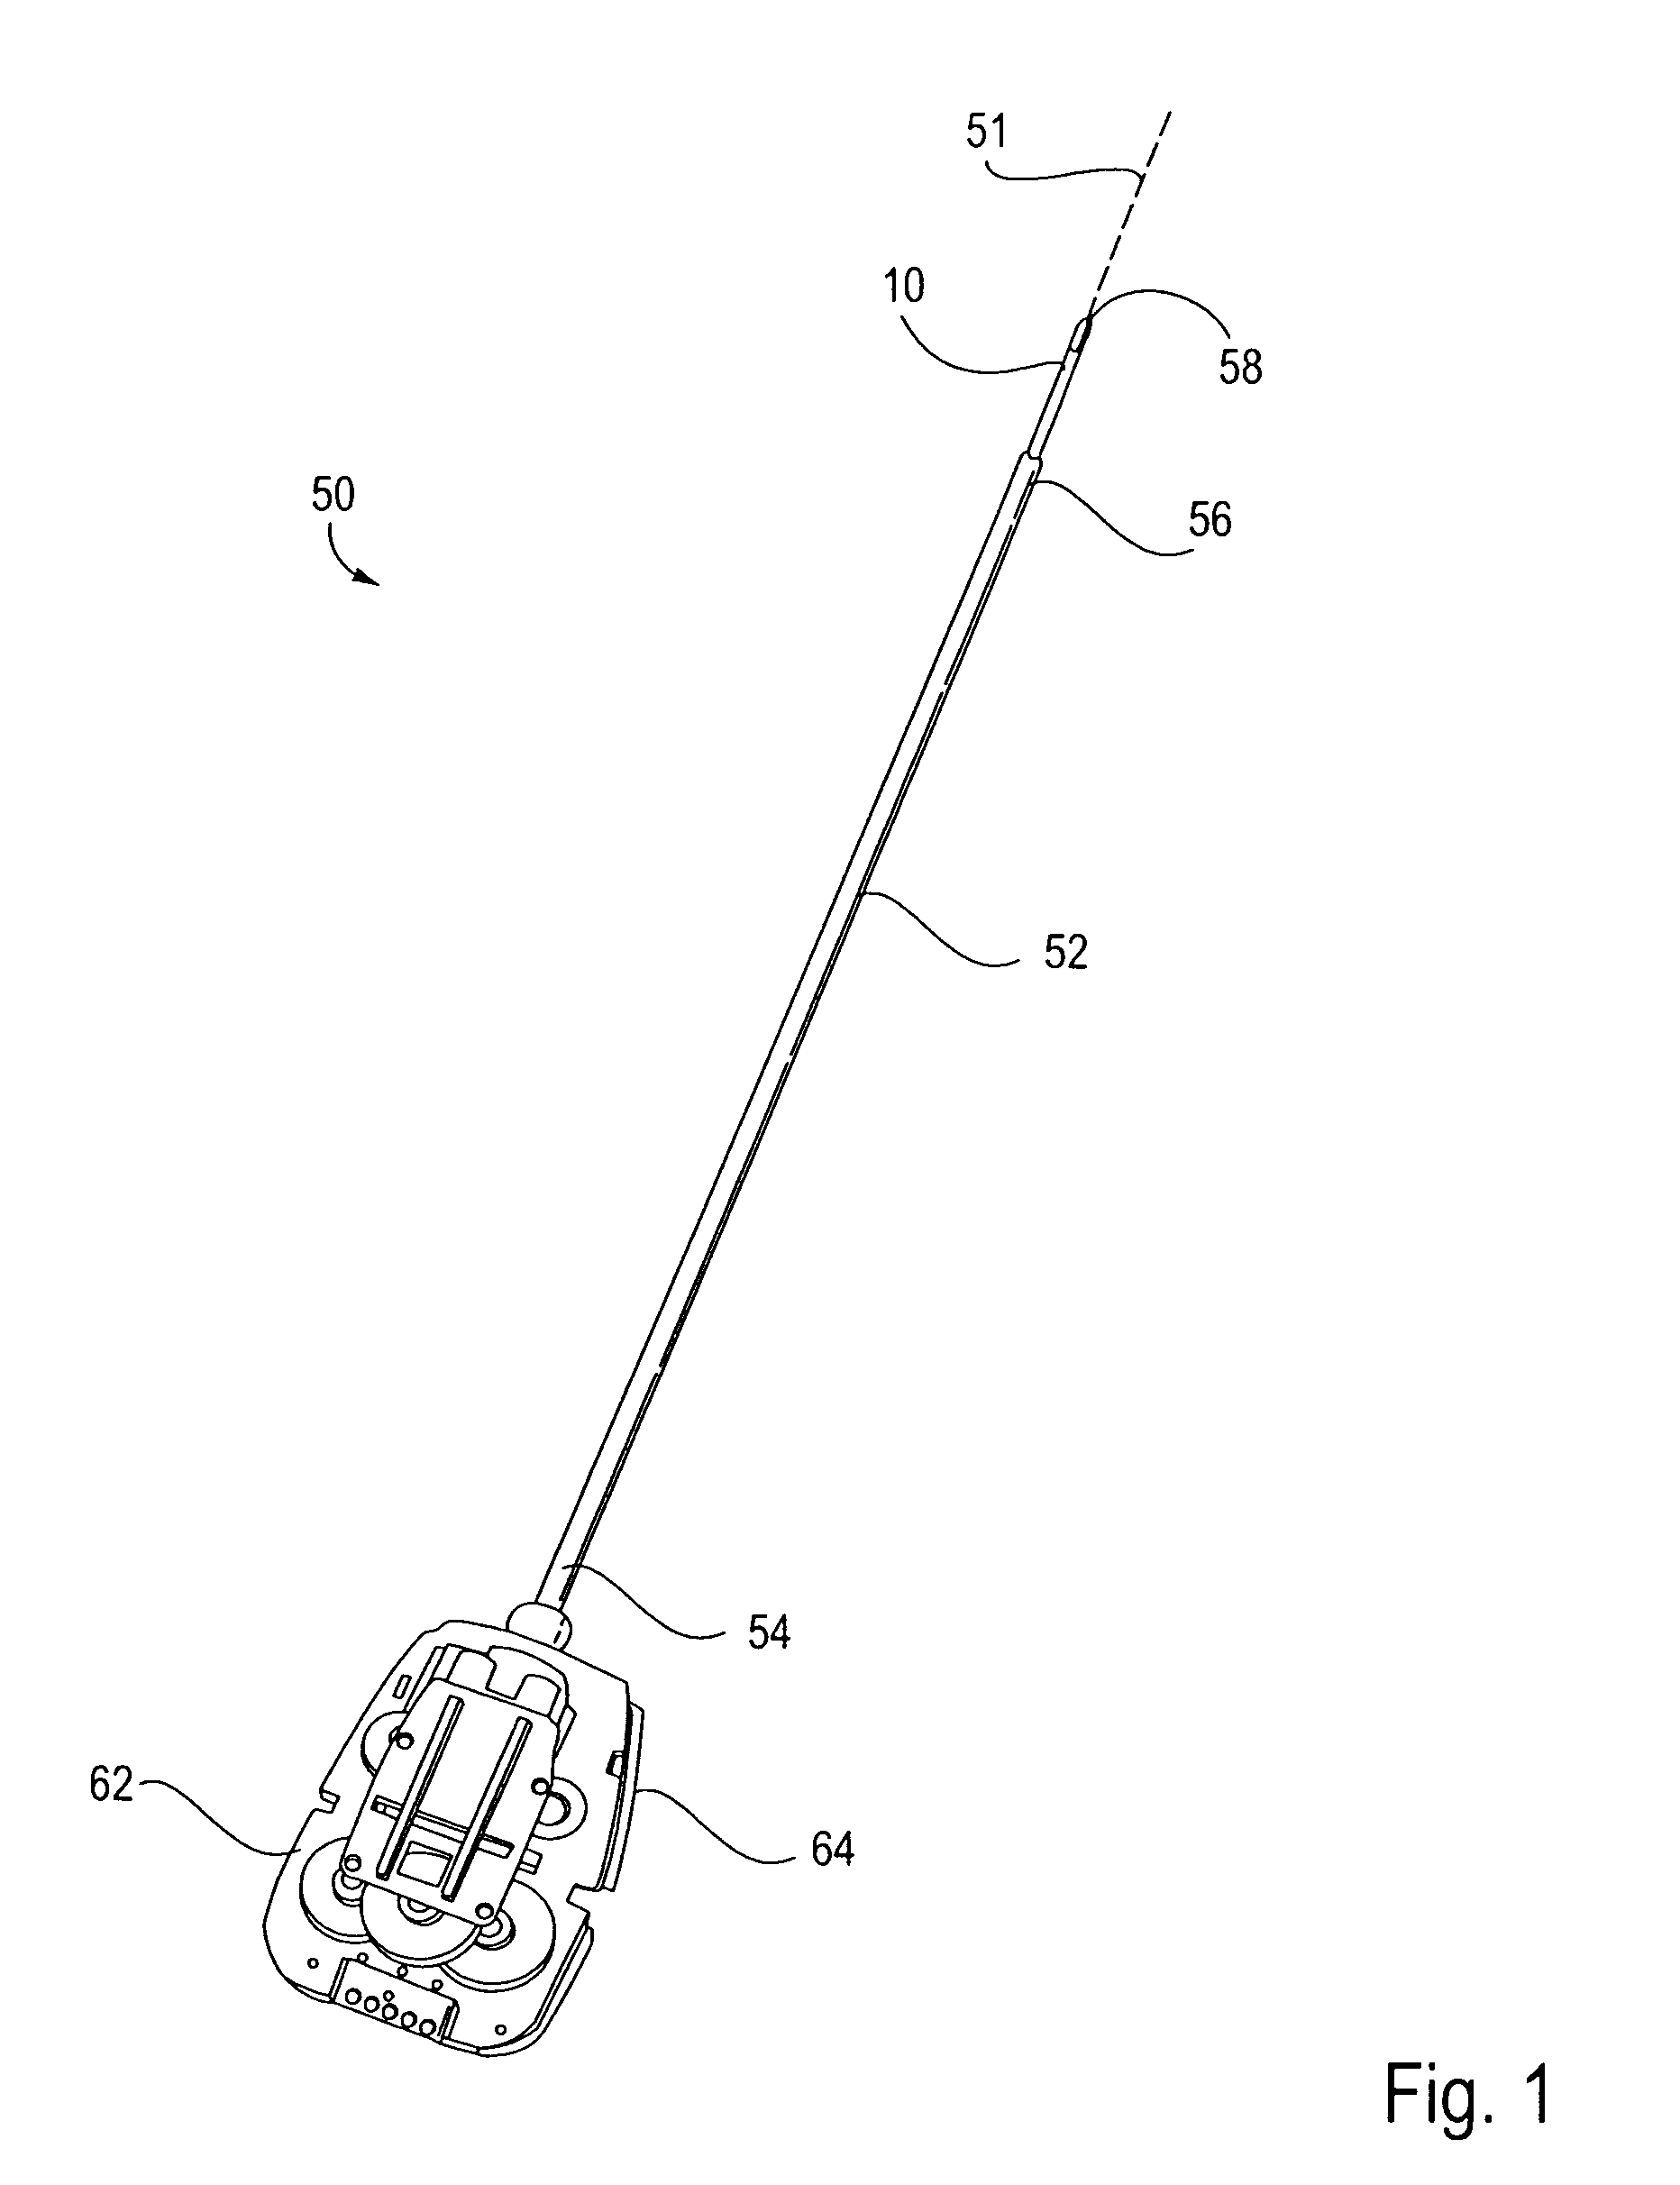 Platform link wrist mechanism